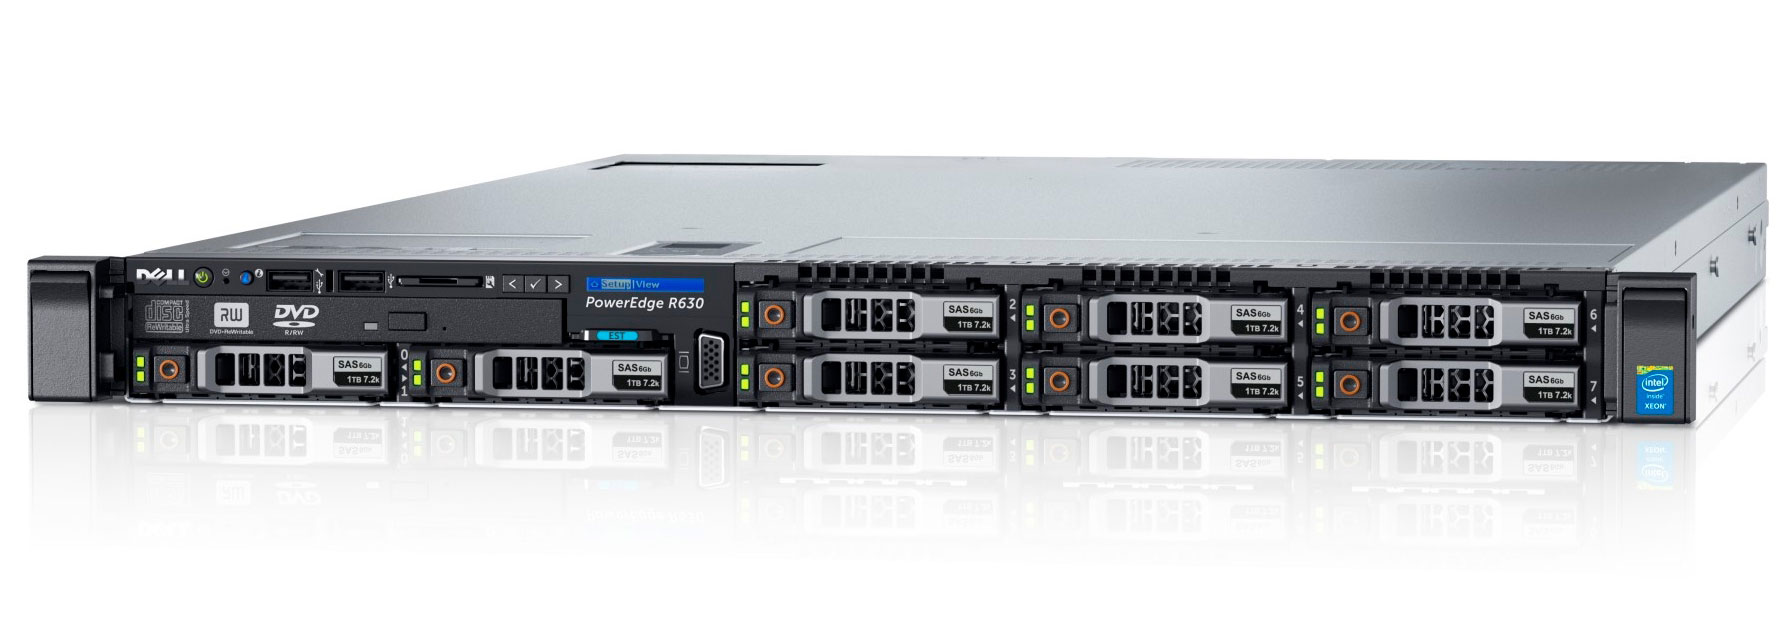 Подробное фото Сервер DELL PowerEdge R630 2x Xeon E5-2650v4 256Gb 2133P DDR4 8x noHDD 2.5", SAS RAID Perc H730, 1024Mb, DVD, 2*PSU